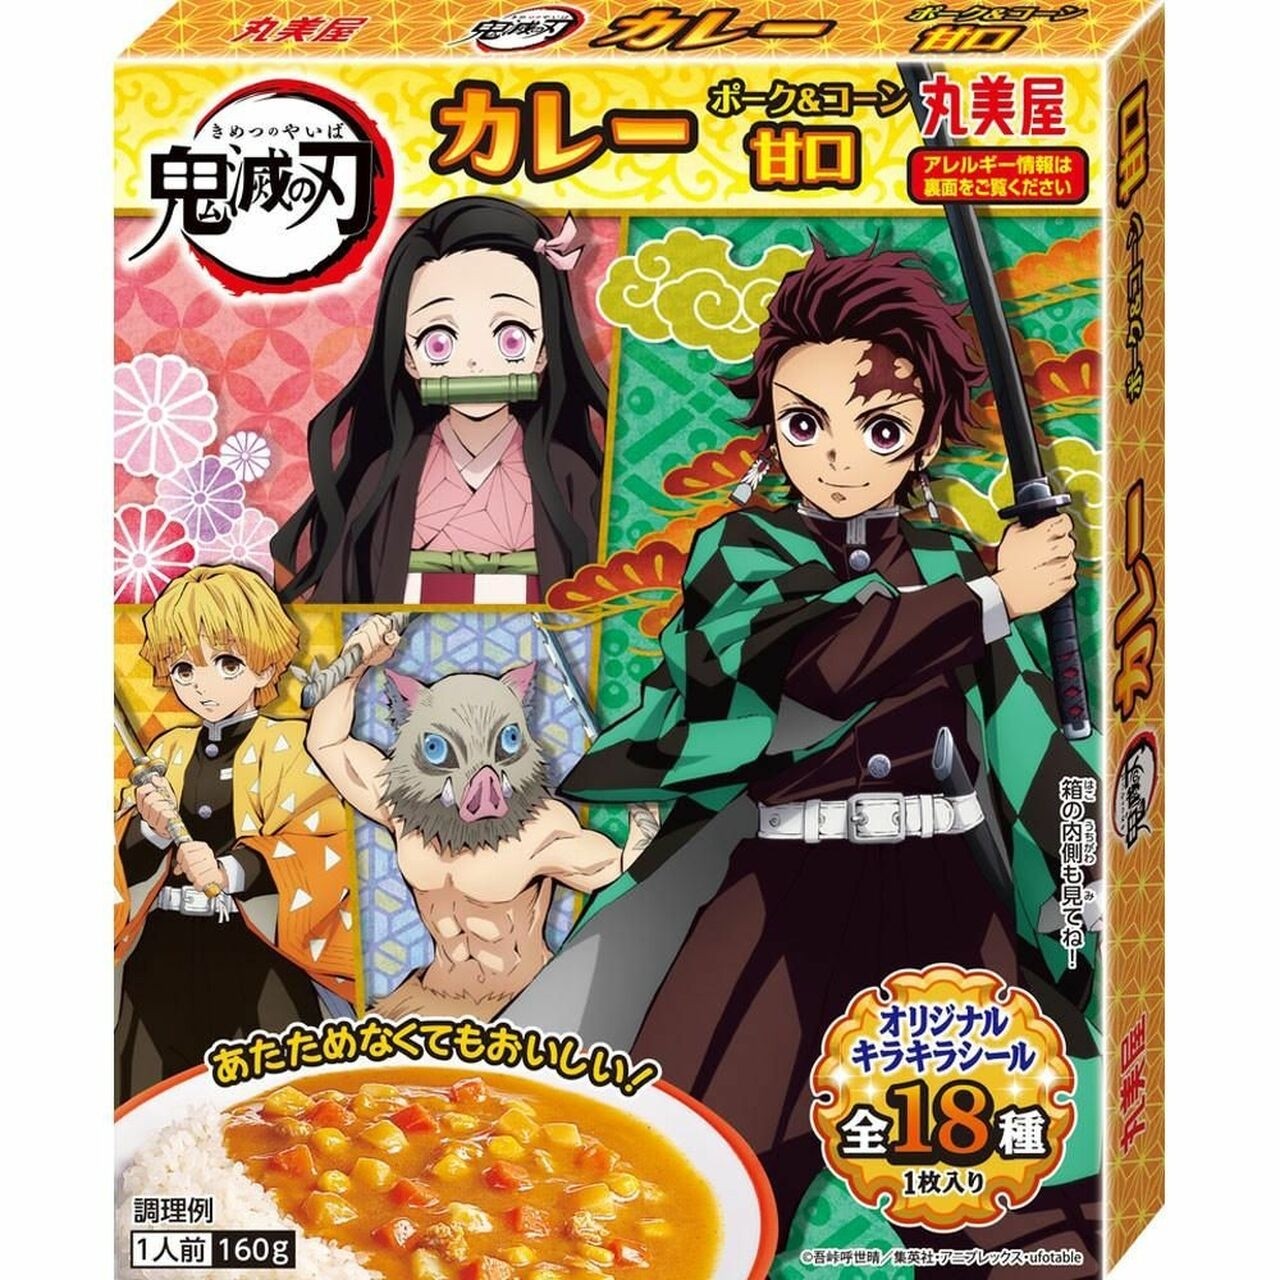 Demon Slayer: Kimetsu no Yaiba - Curry Pork and Corn Mild 160g